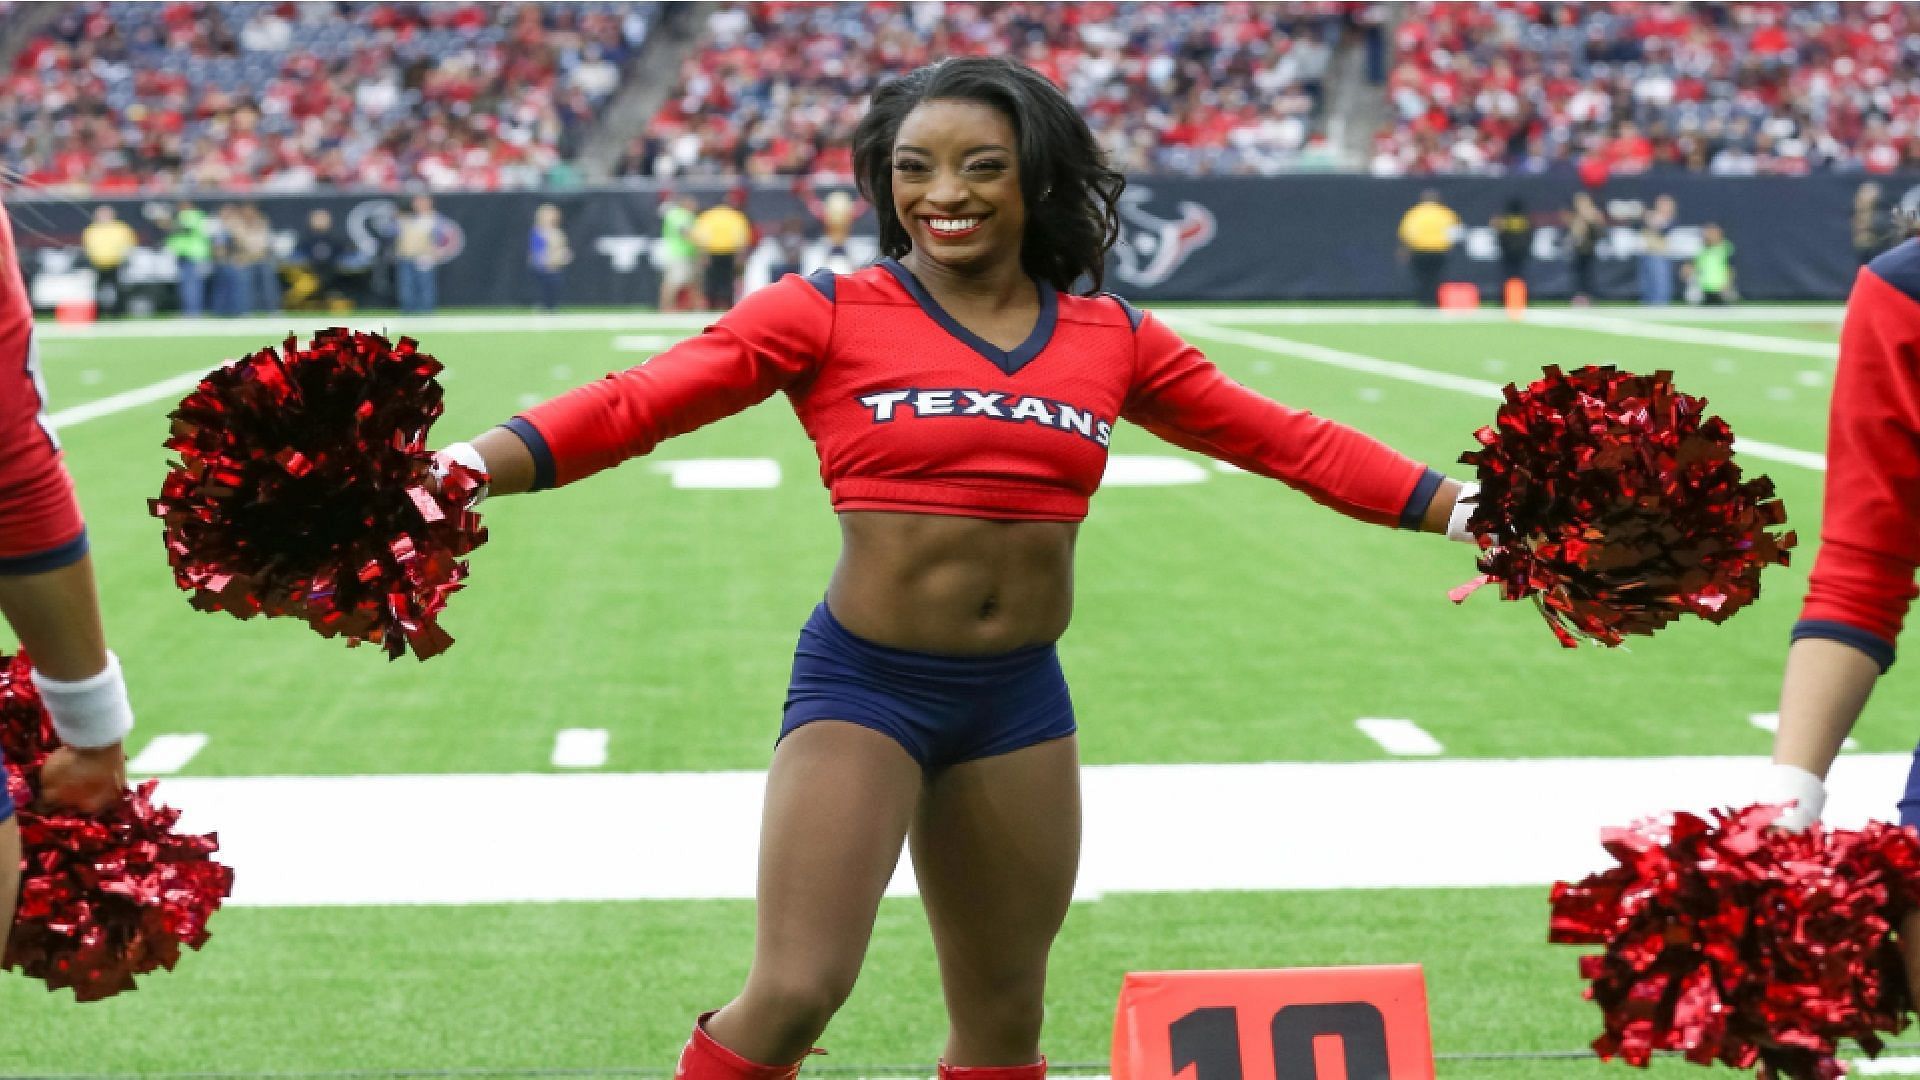 Simone Biles as Houston Texans Cheerleader